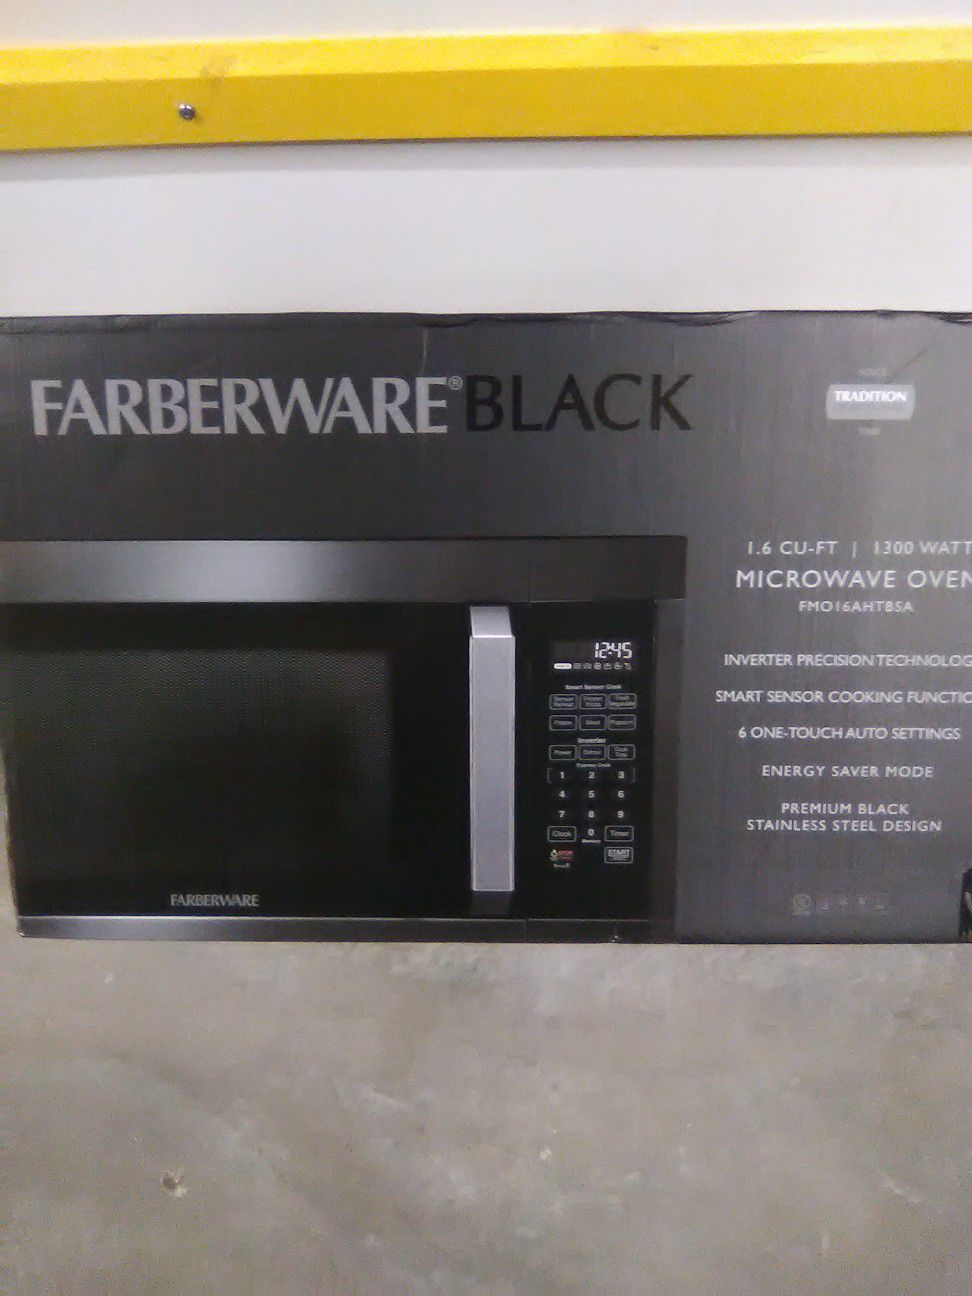 Farberware Black Microwave